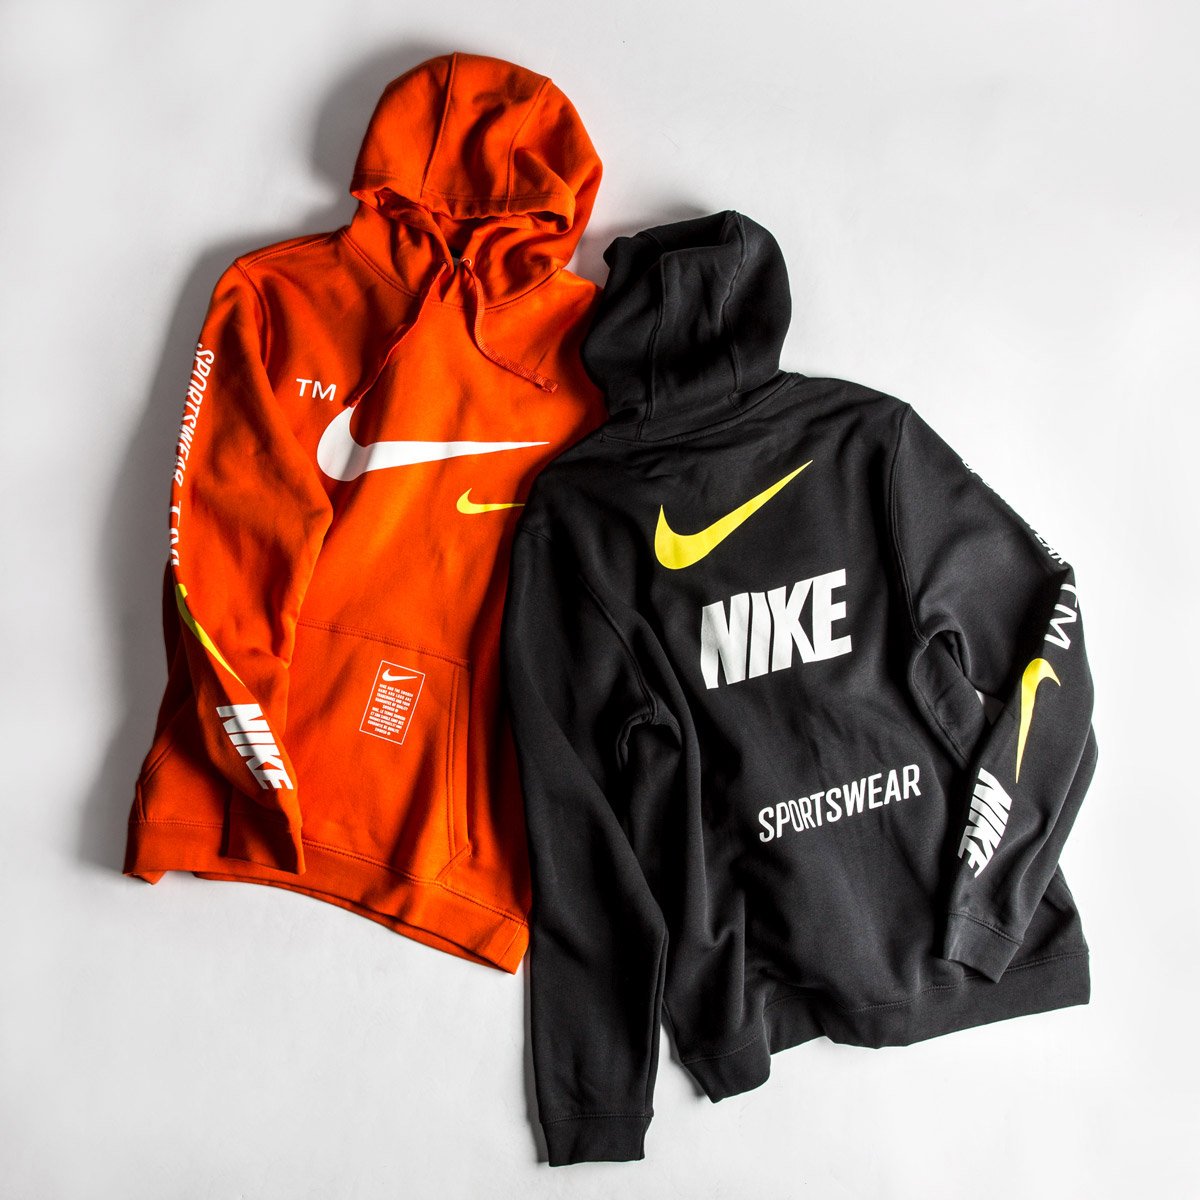 The Nike Sportswear Micro-Branding 